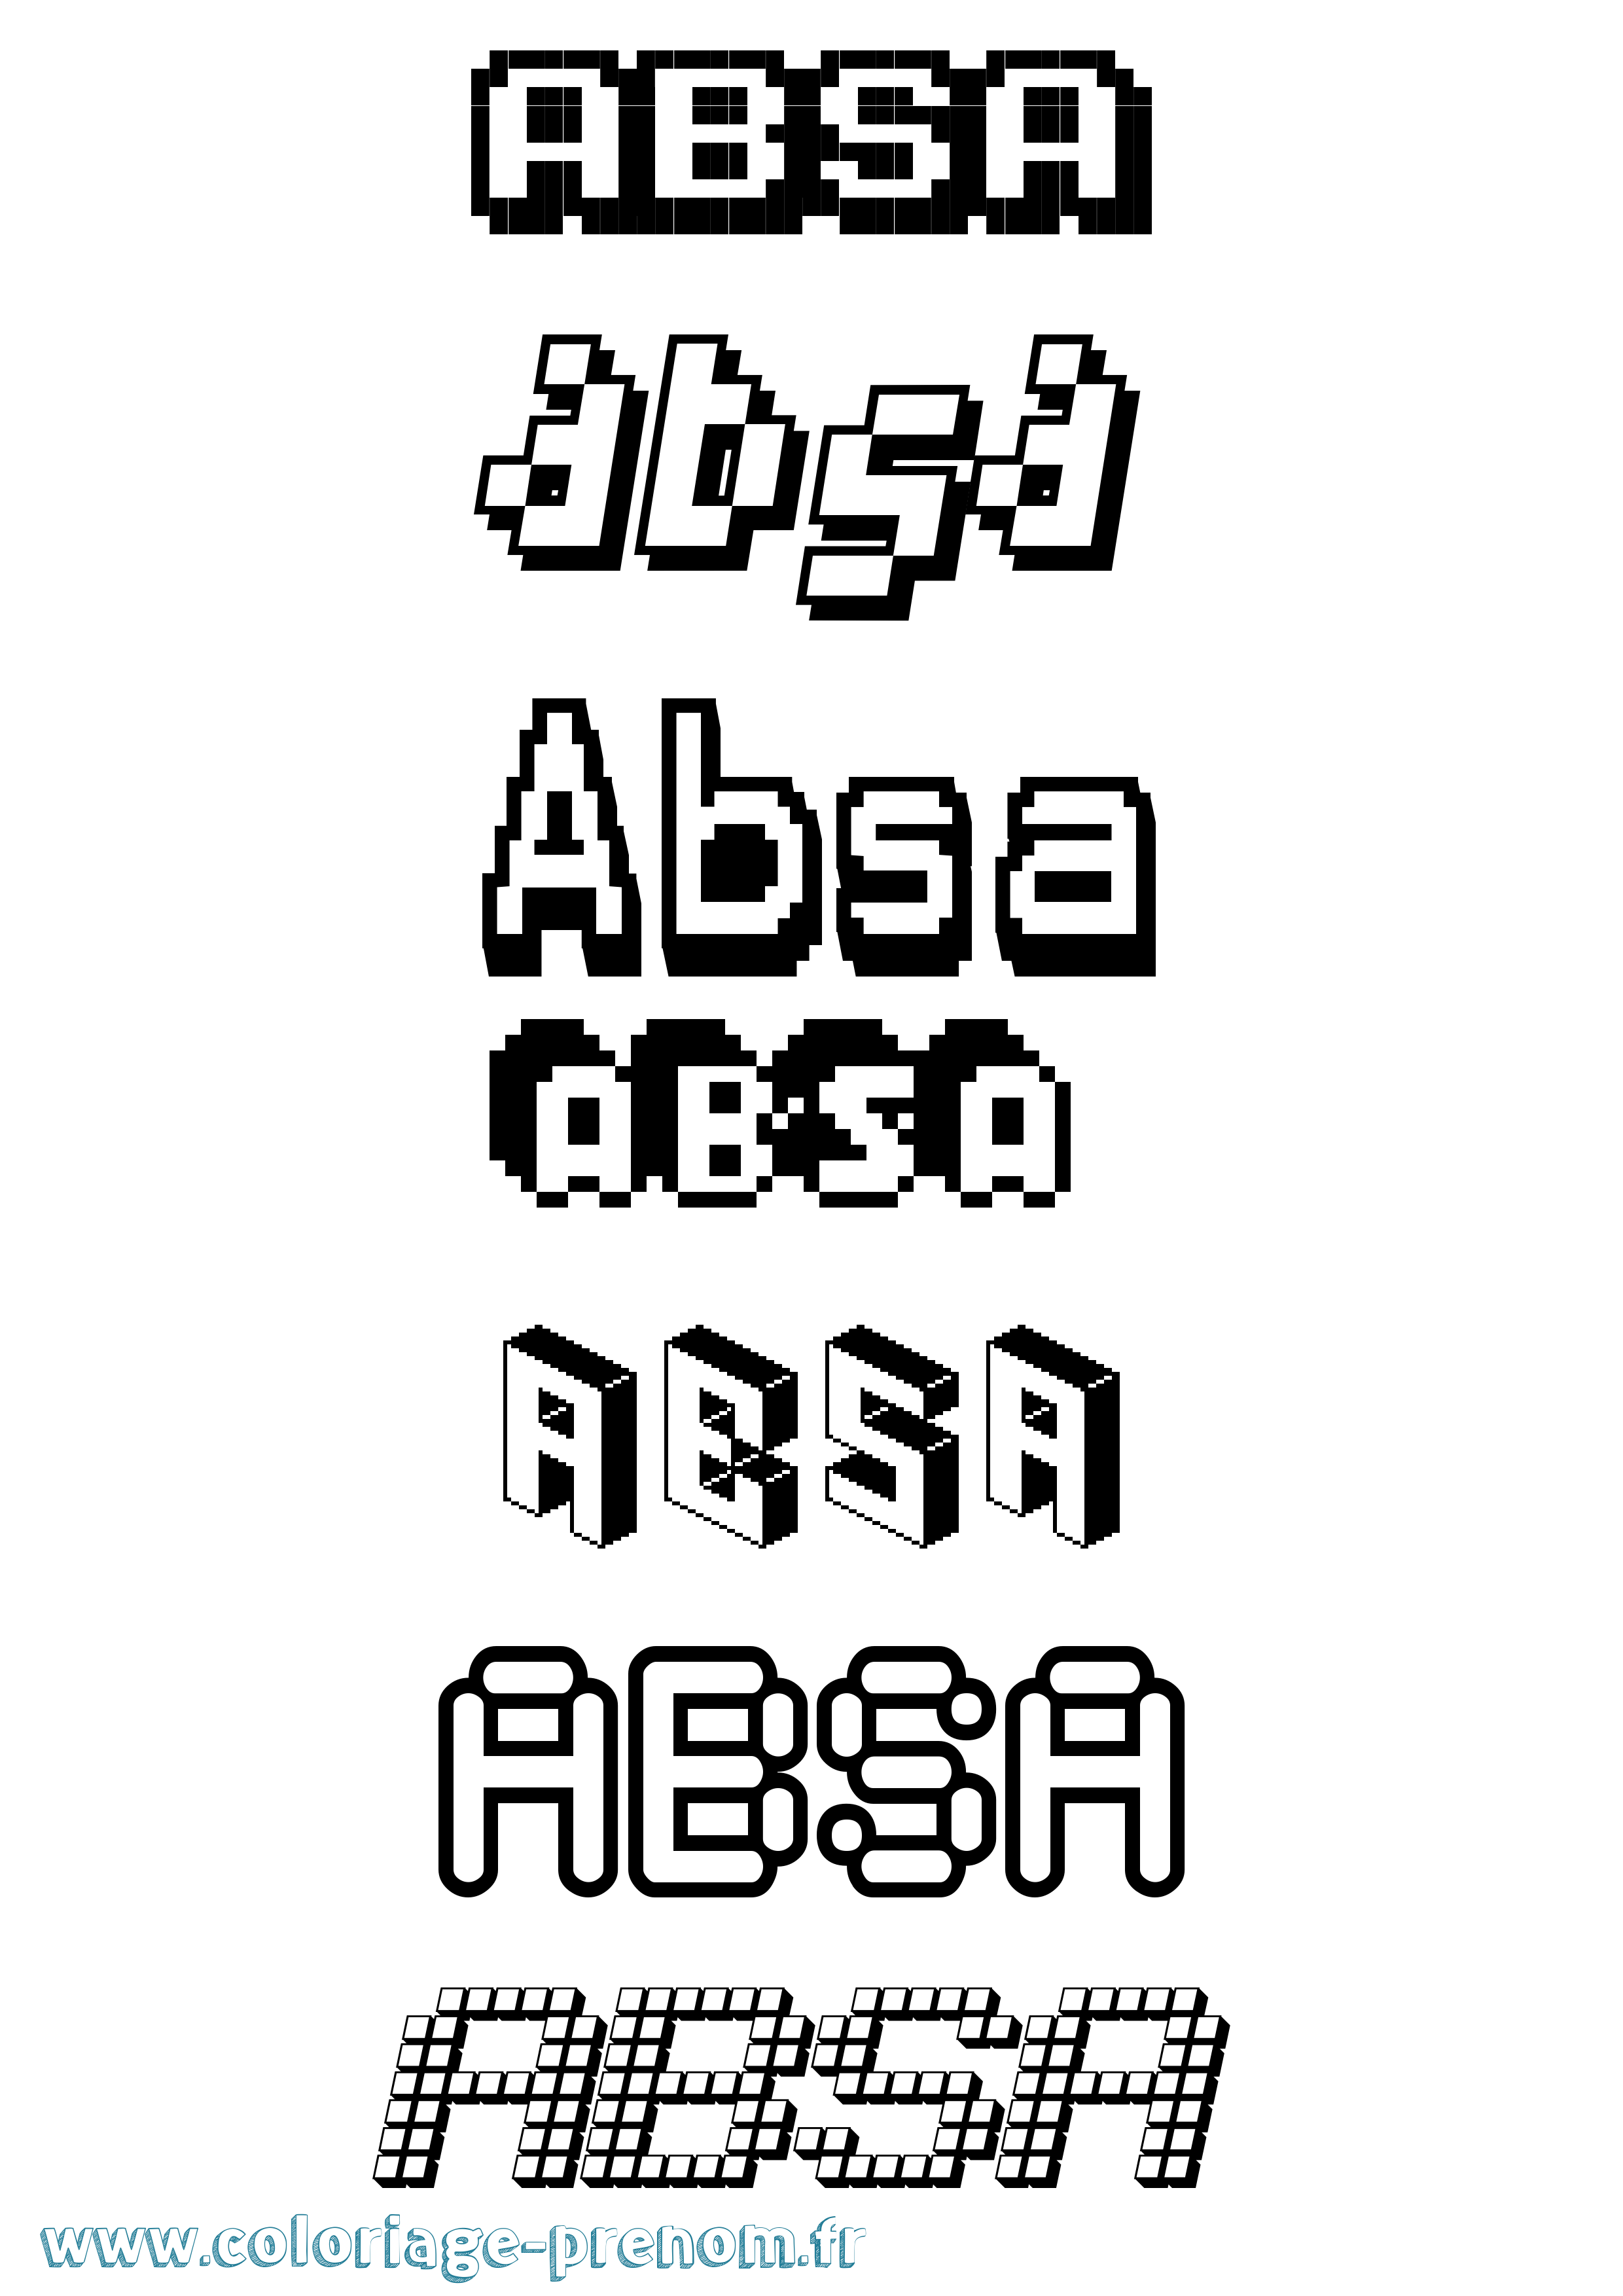 Coloriage prénom Absa Pixel